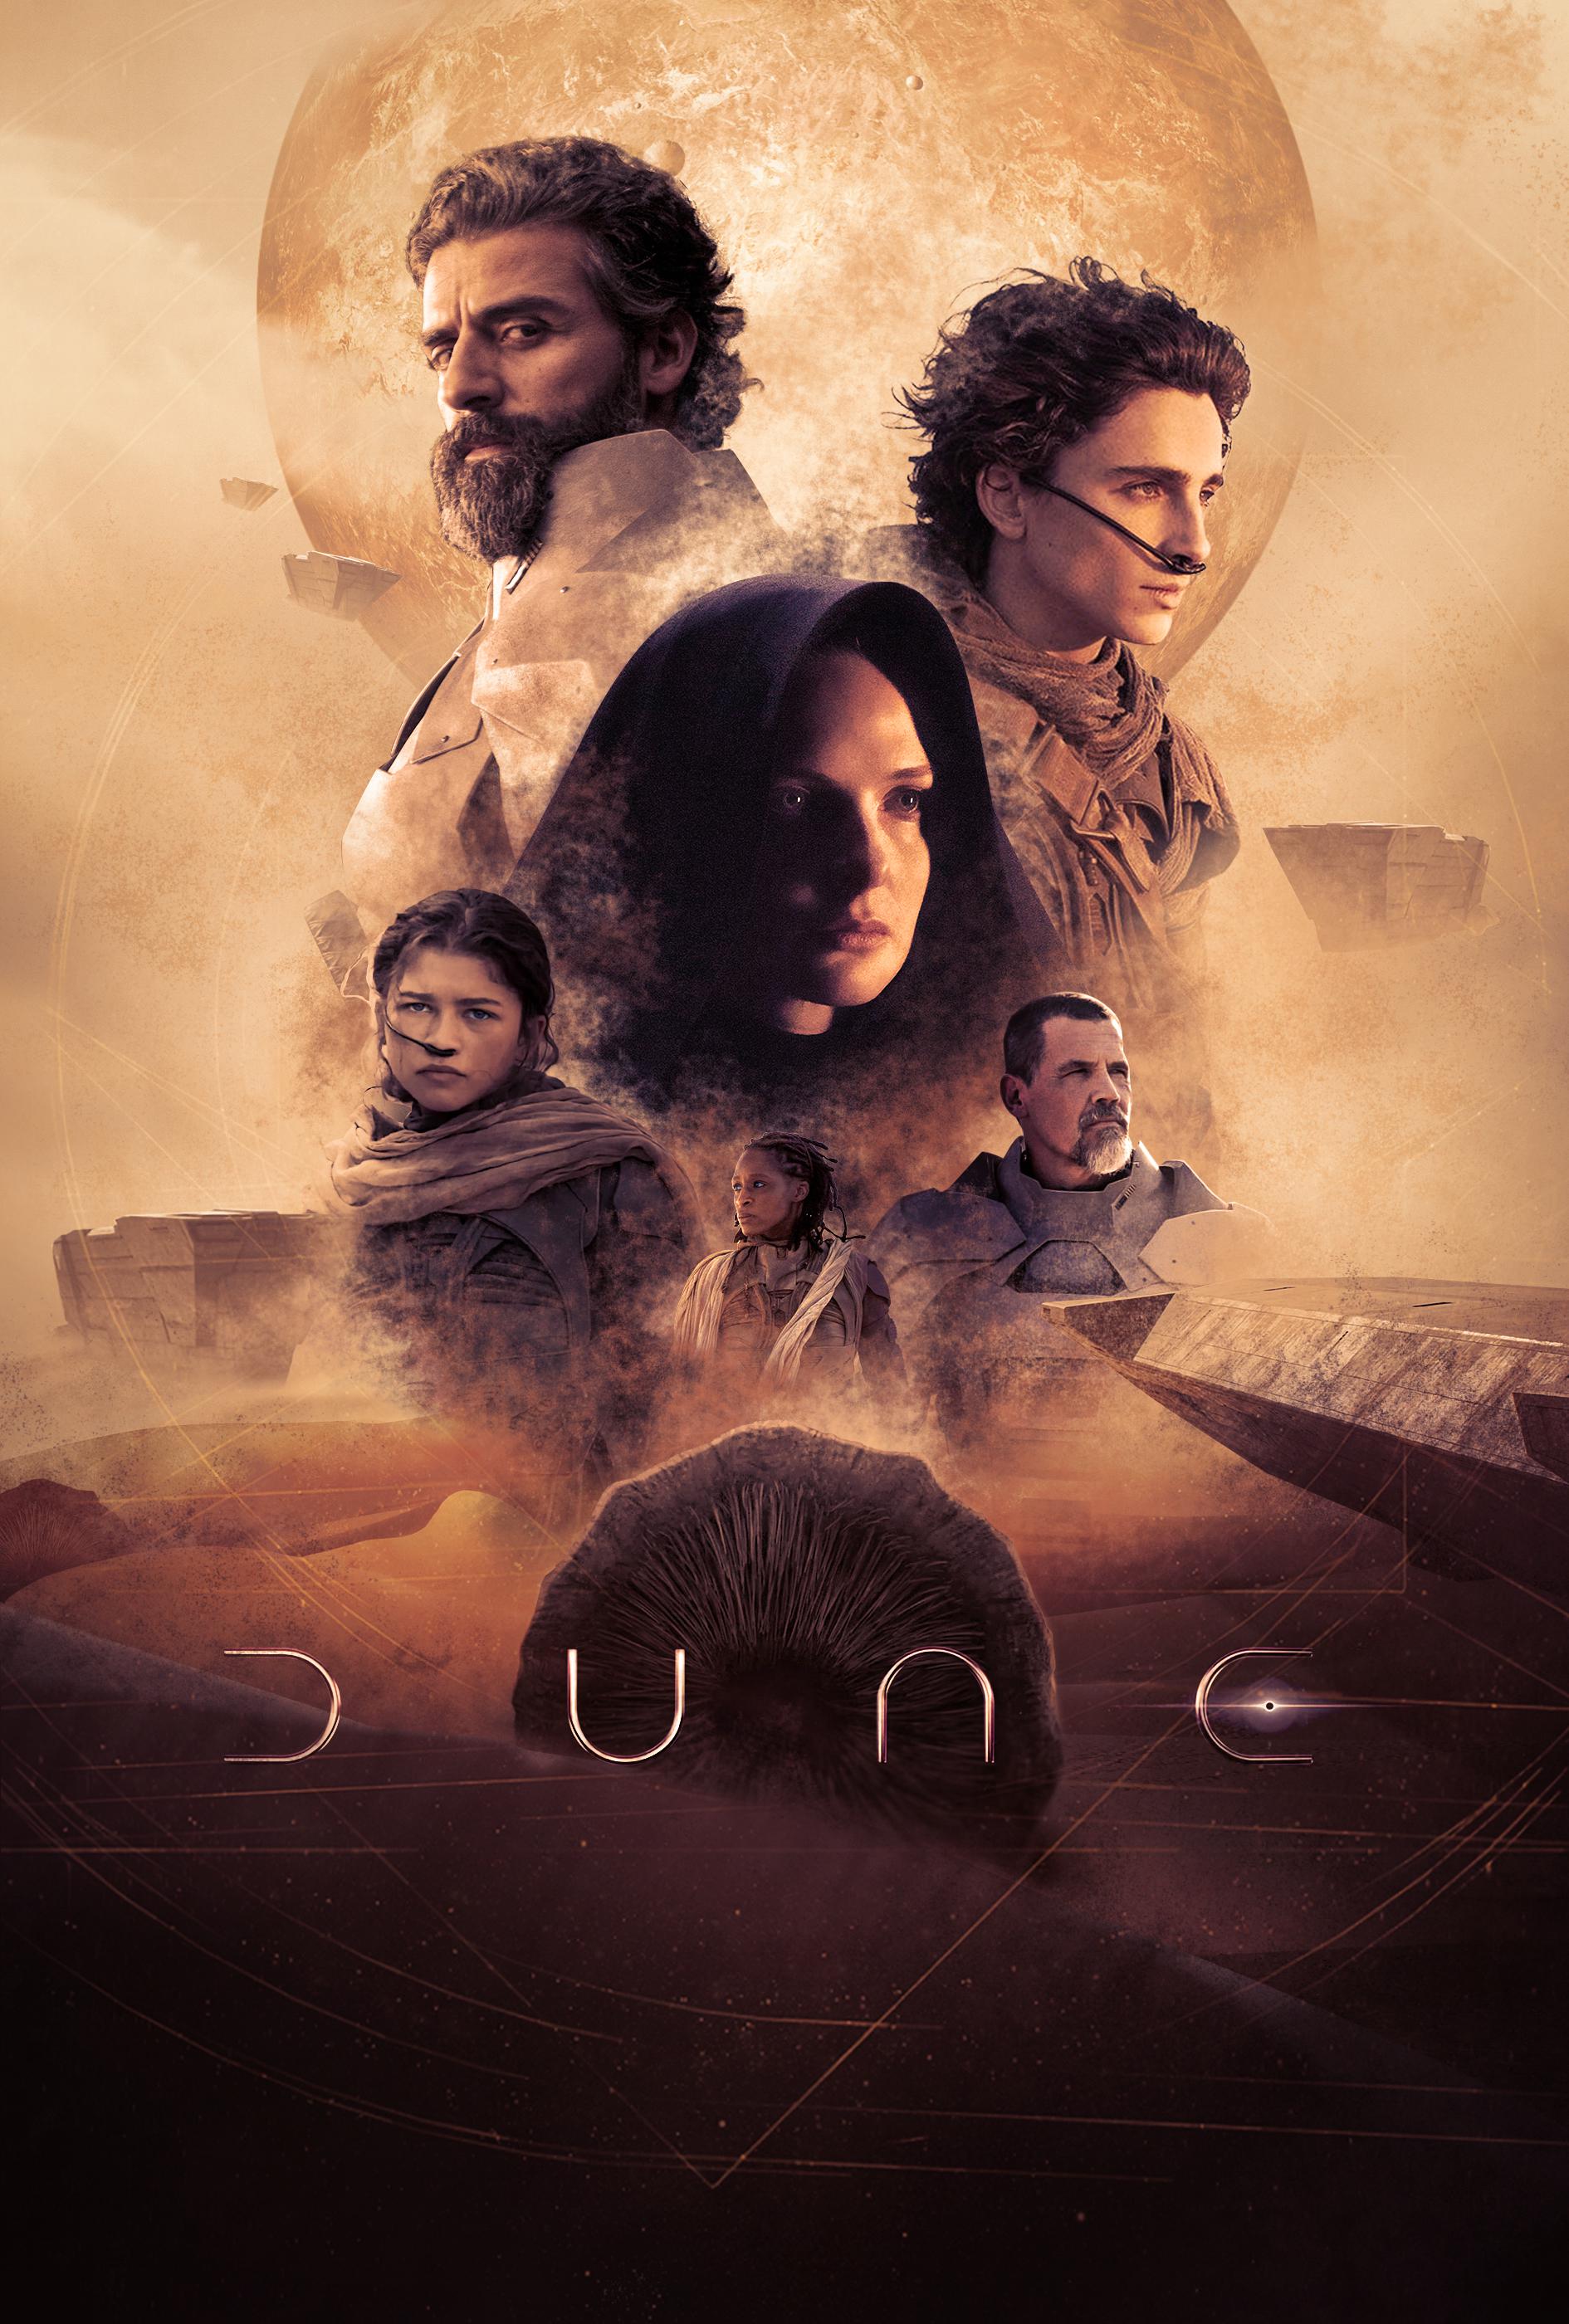 Wallpaper Movie Poster 2021, Dune, Godzilla vs Kong, 2021, Television,  Background - Download Free Image